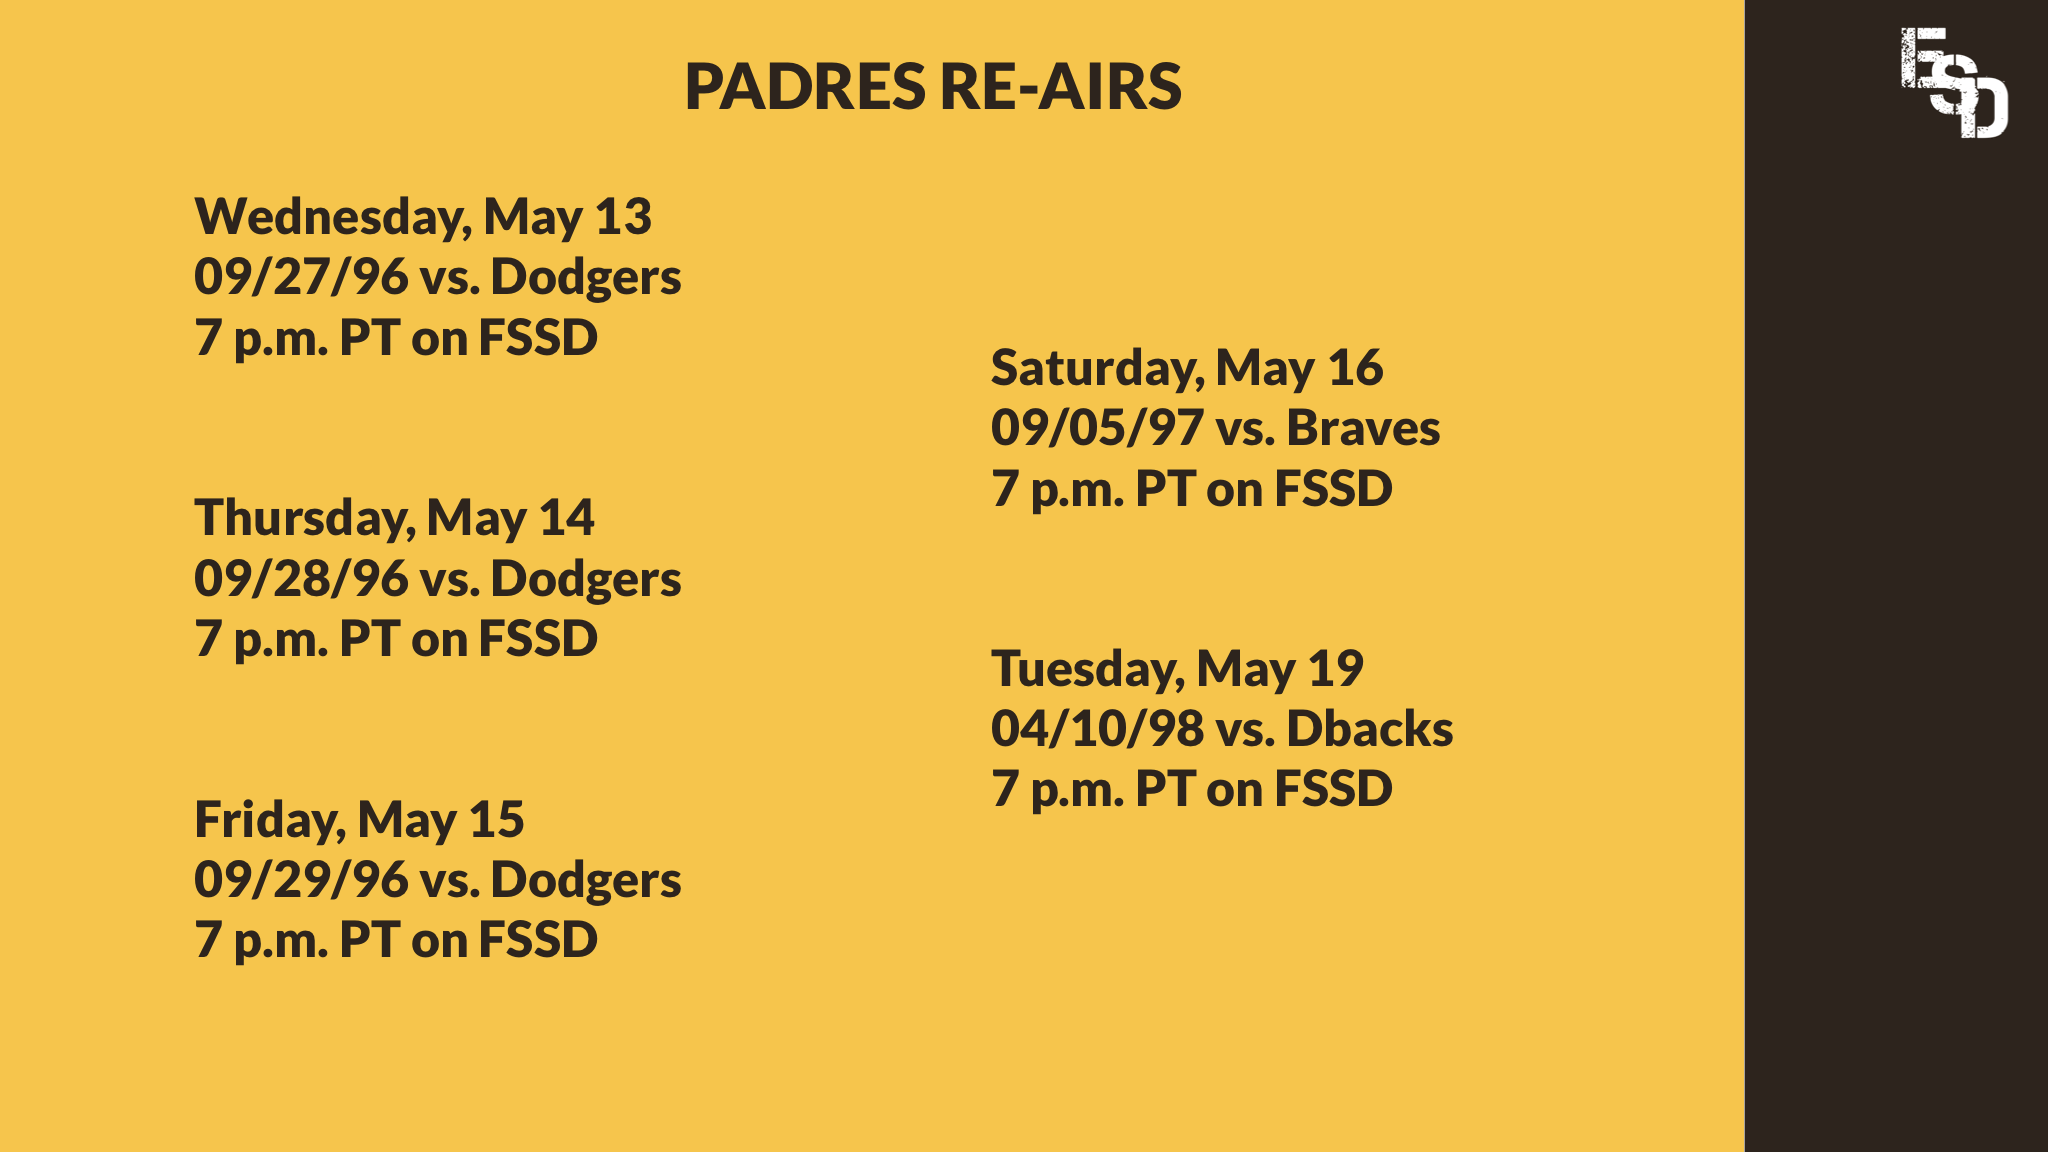 Padres reairs for May 13-19